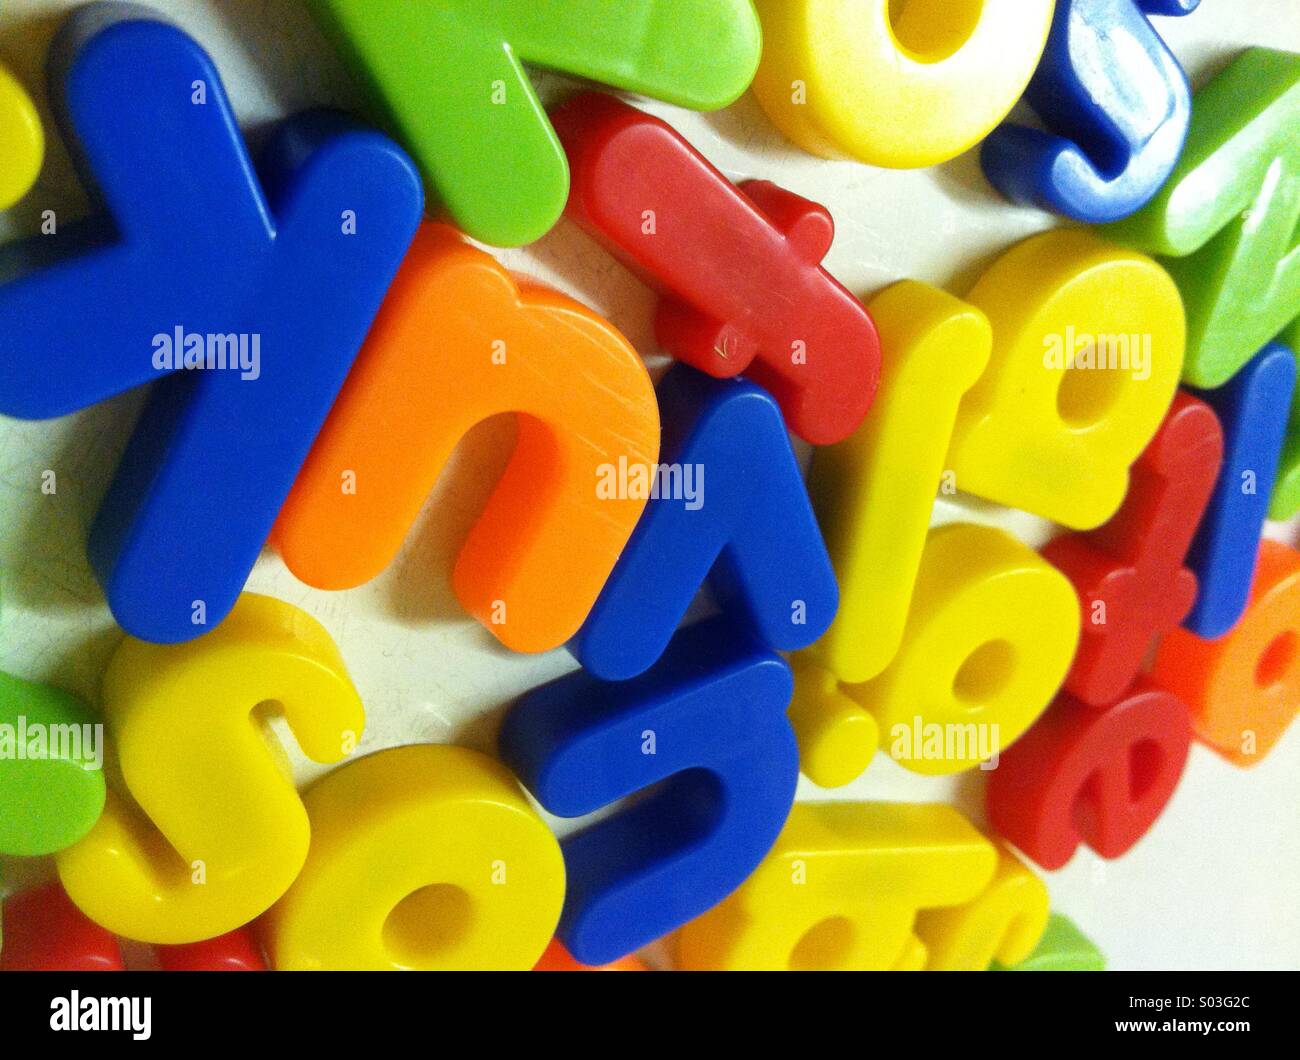 A jumble of random letter magnets Stock Photo